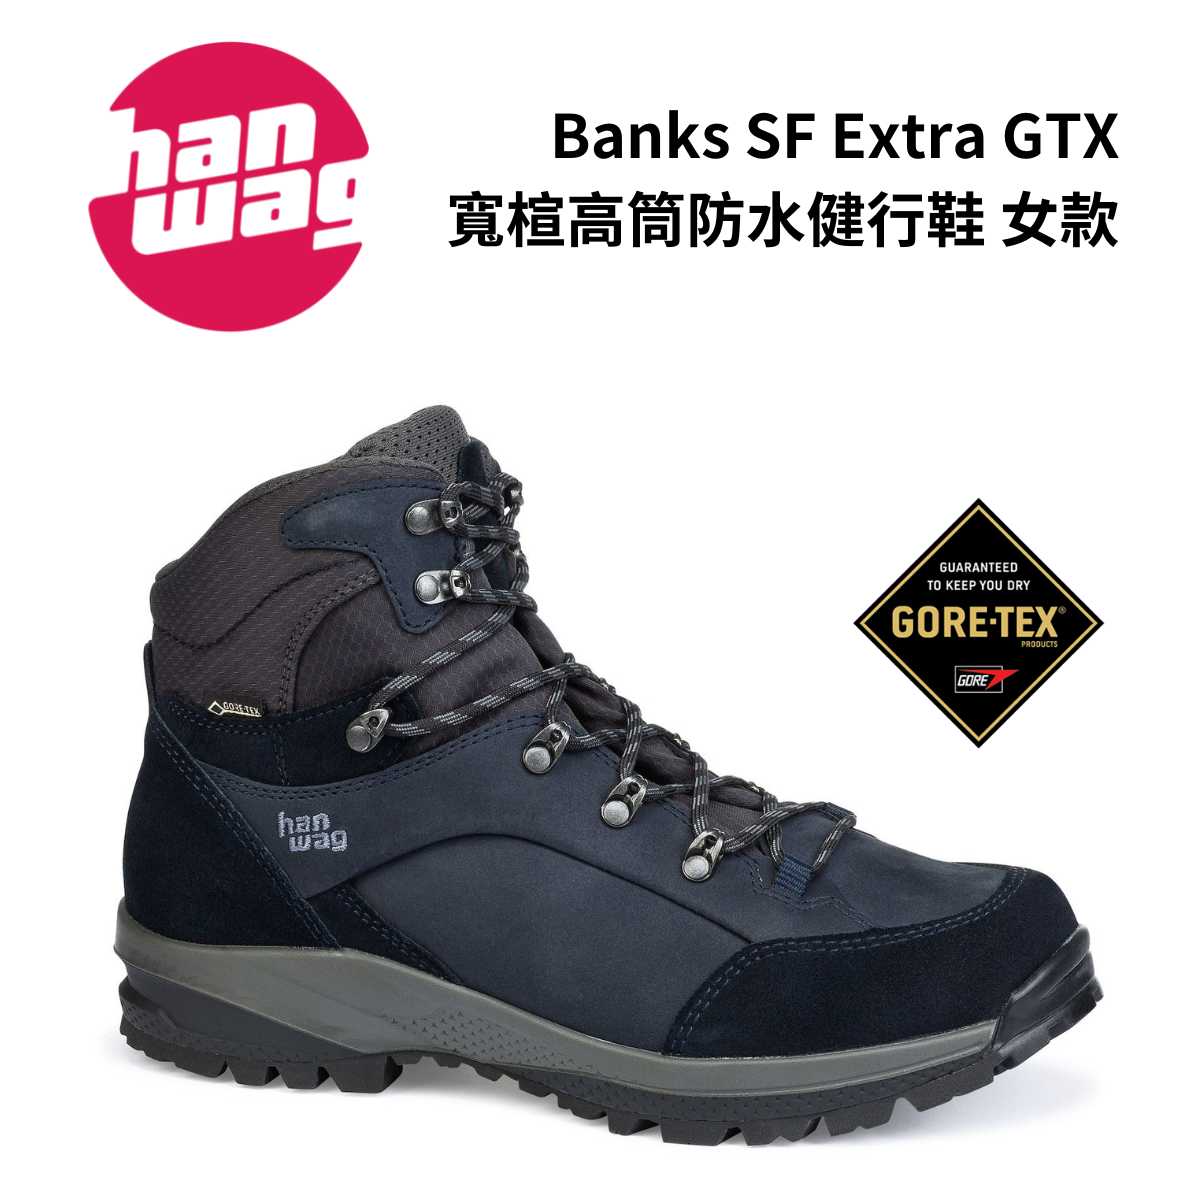 【Hanwag】Banks SF Extra Lady GTX 女款 寬楦高筒防水健行鞋 海軍藍/瀝青灰